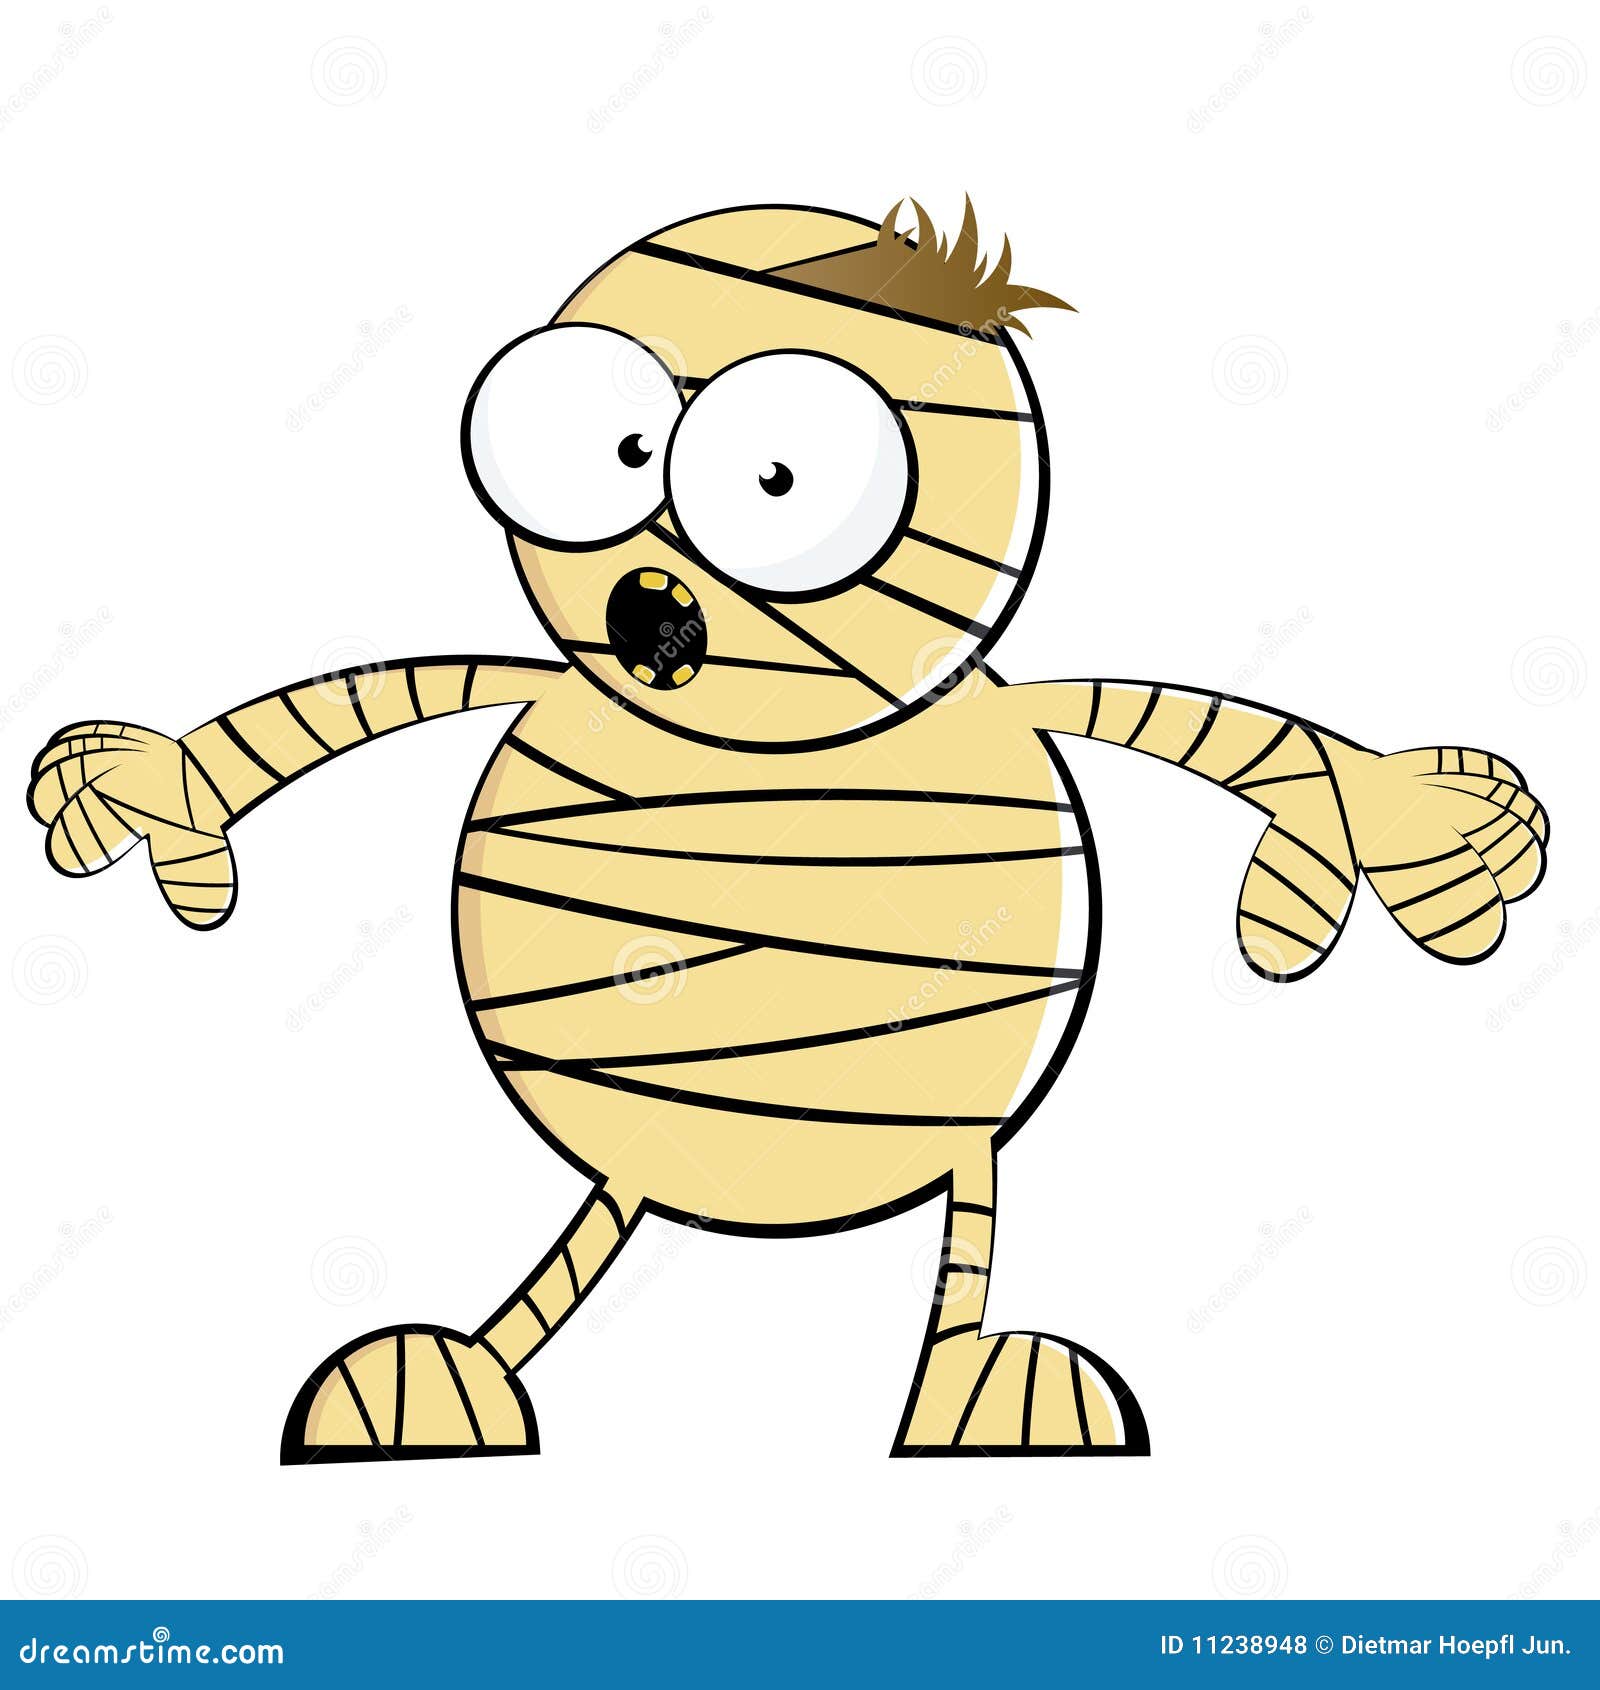 Cartoon scary mummy stock vector. Illustration of character - 11238948